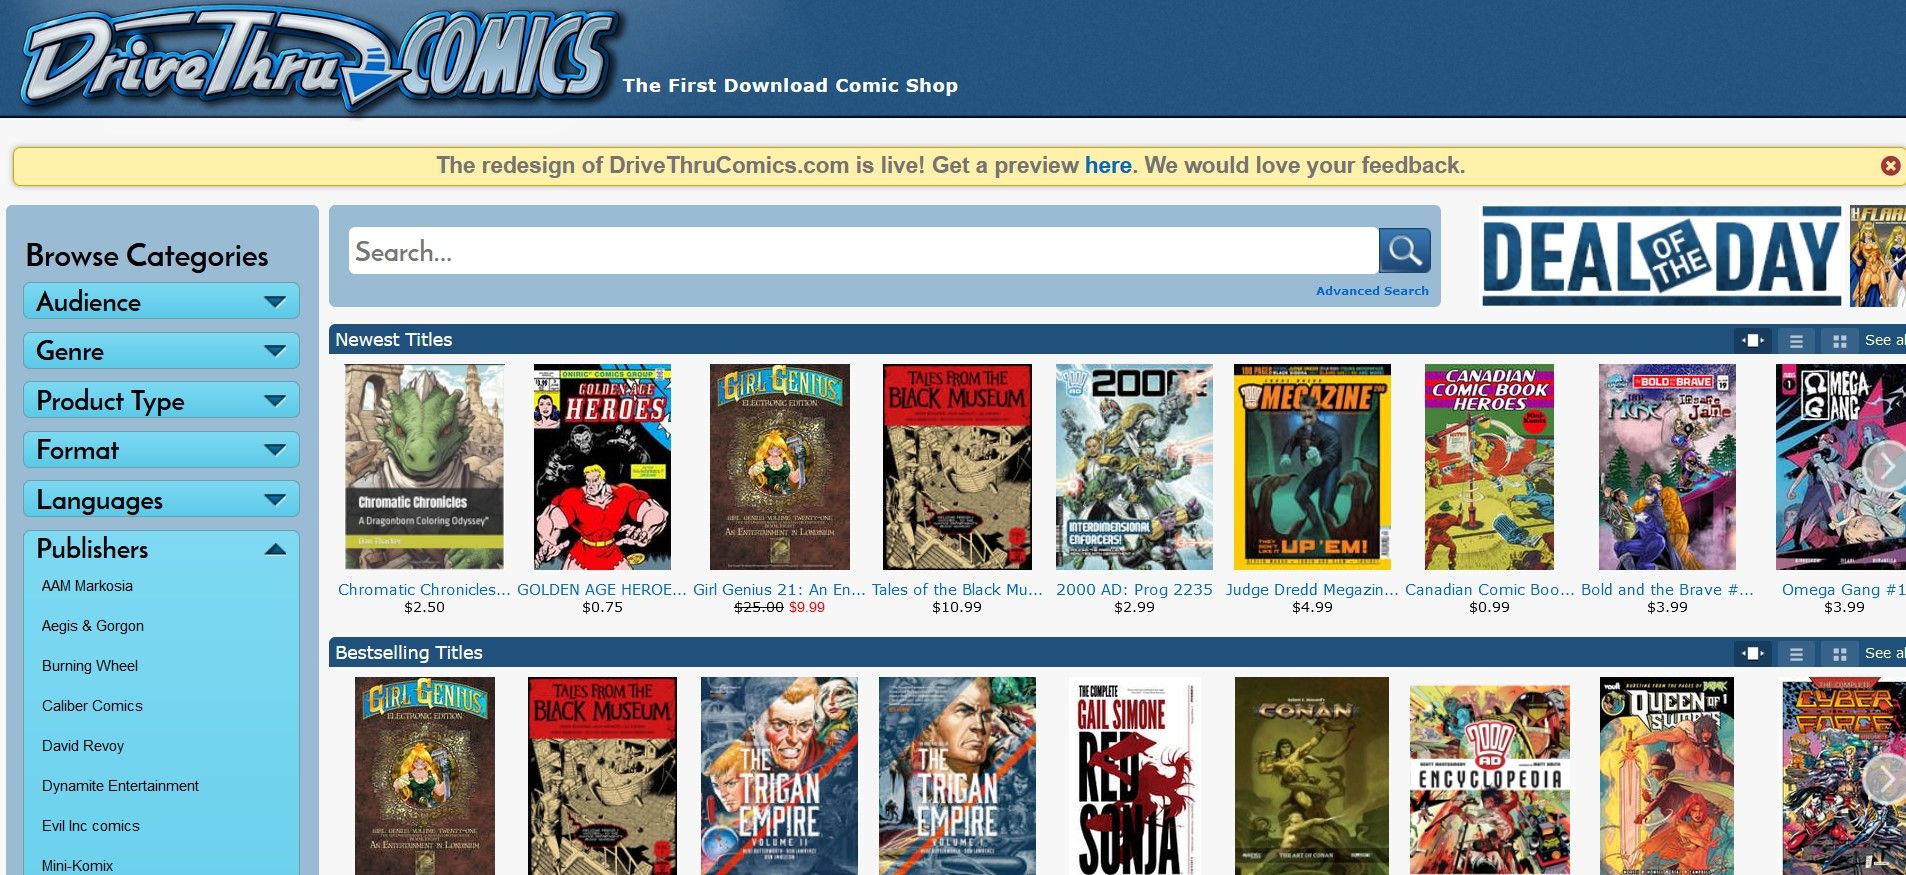 DriveThruComics Website for Reading and Downloading Comics